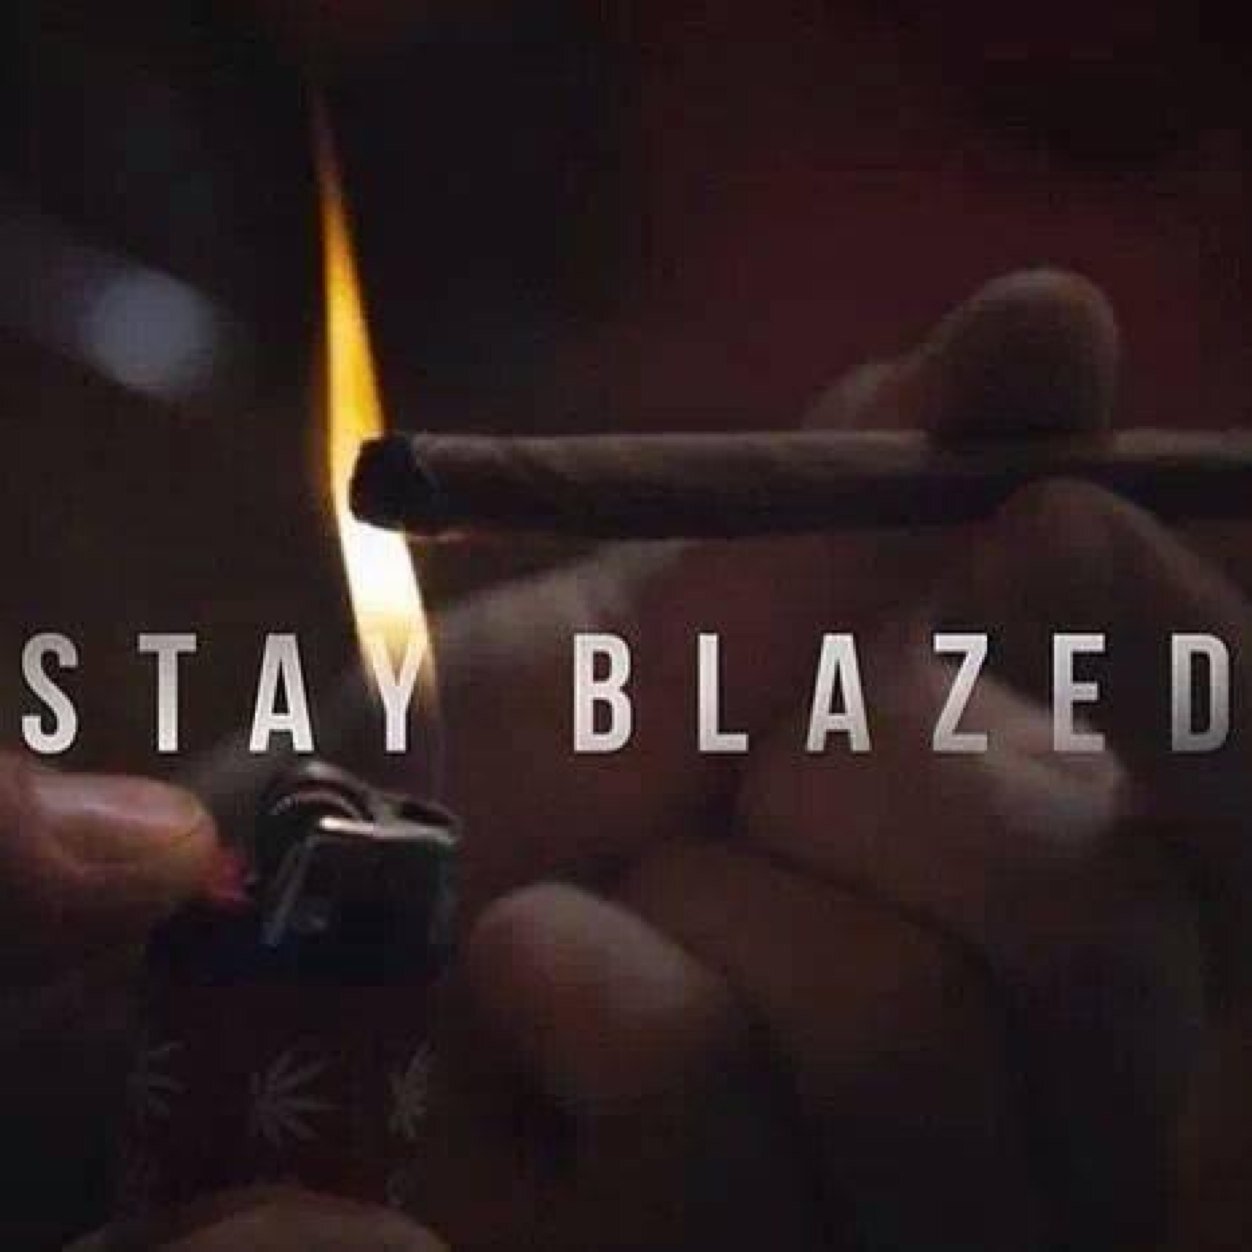 Smoke weed everyday #stayblazed